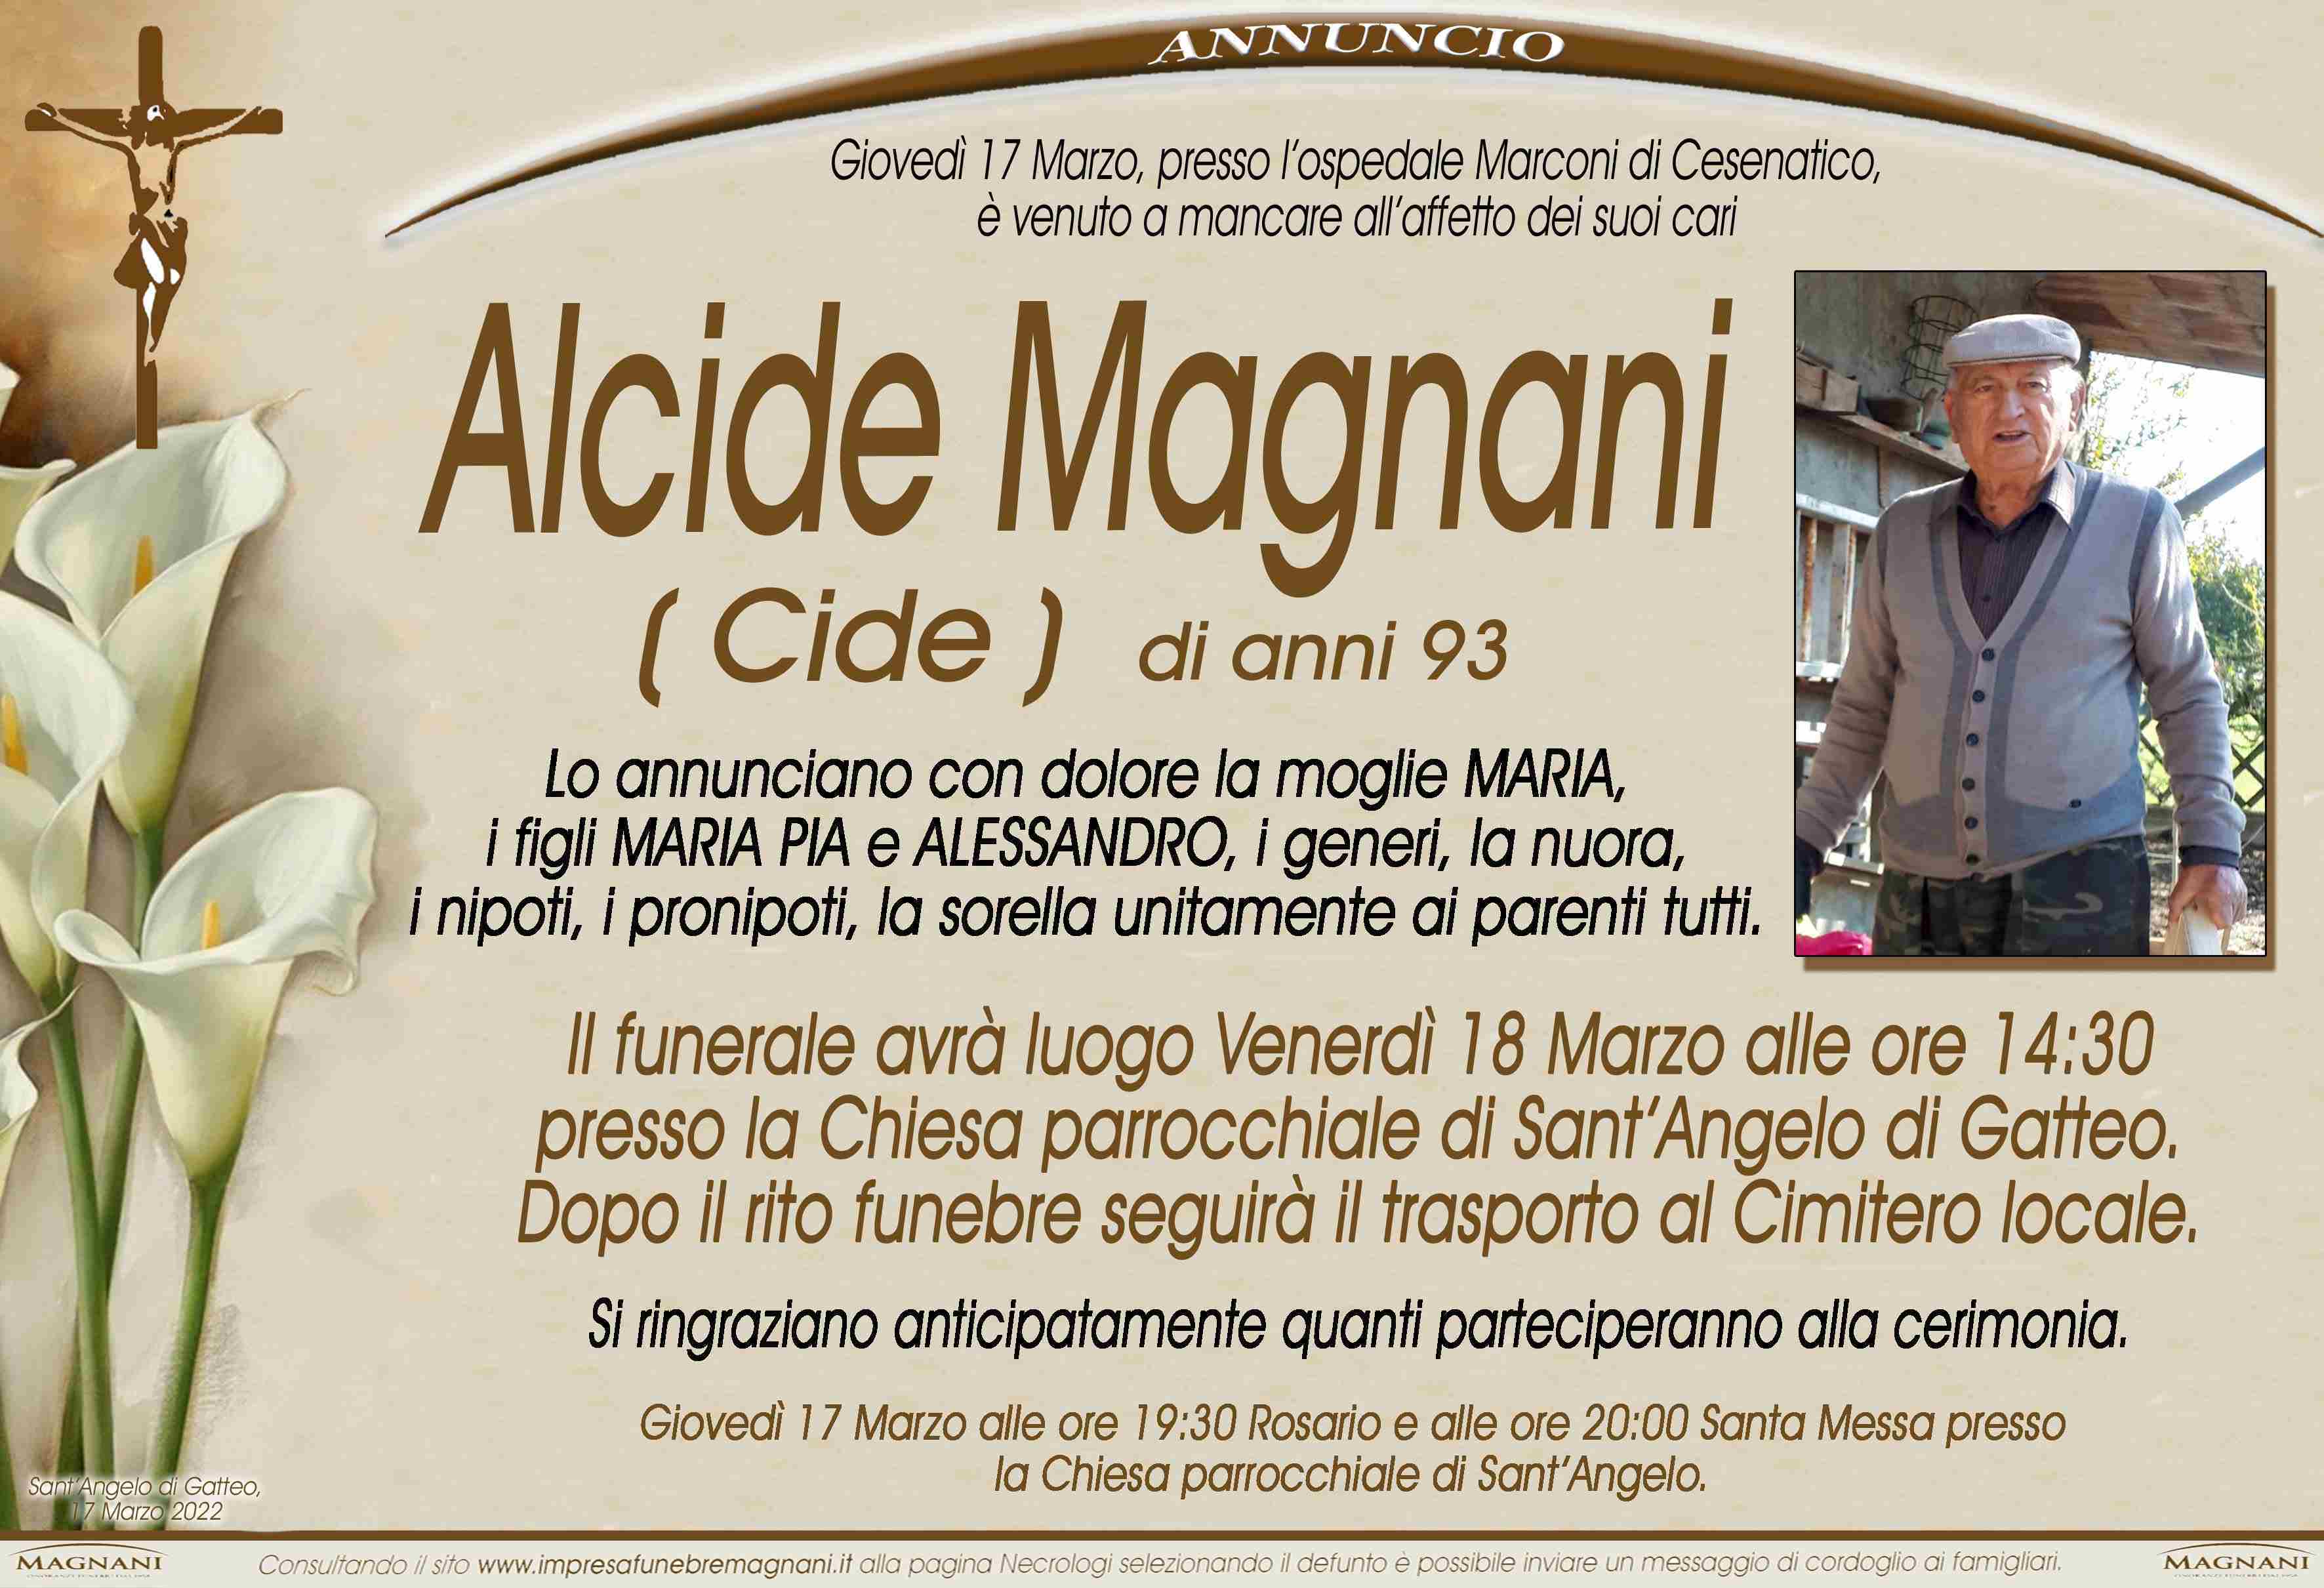 Alcide Magnani